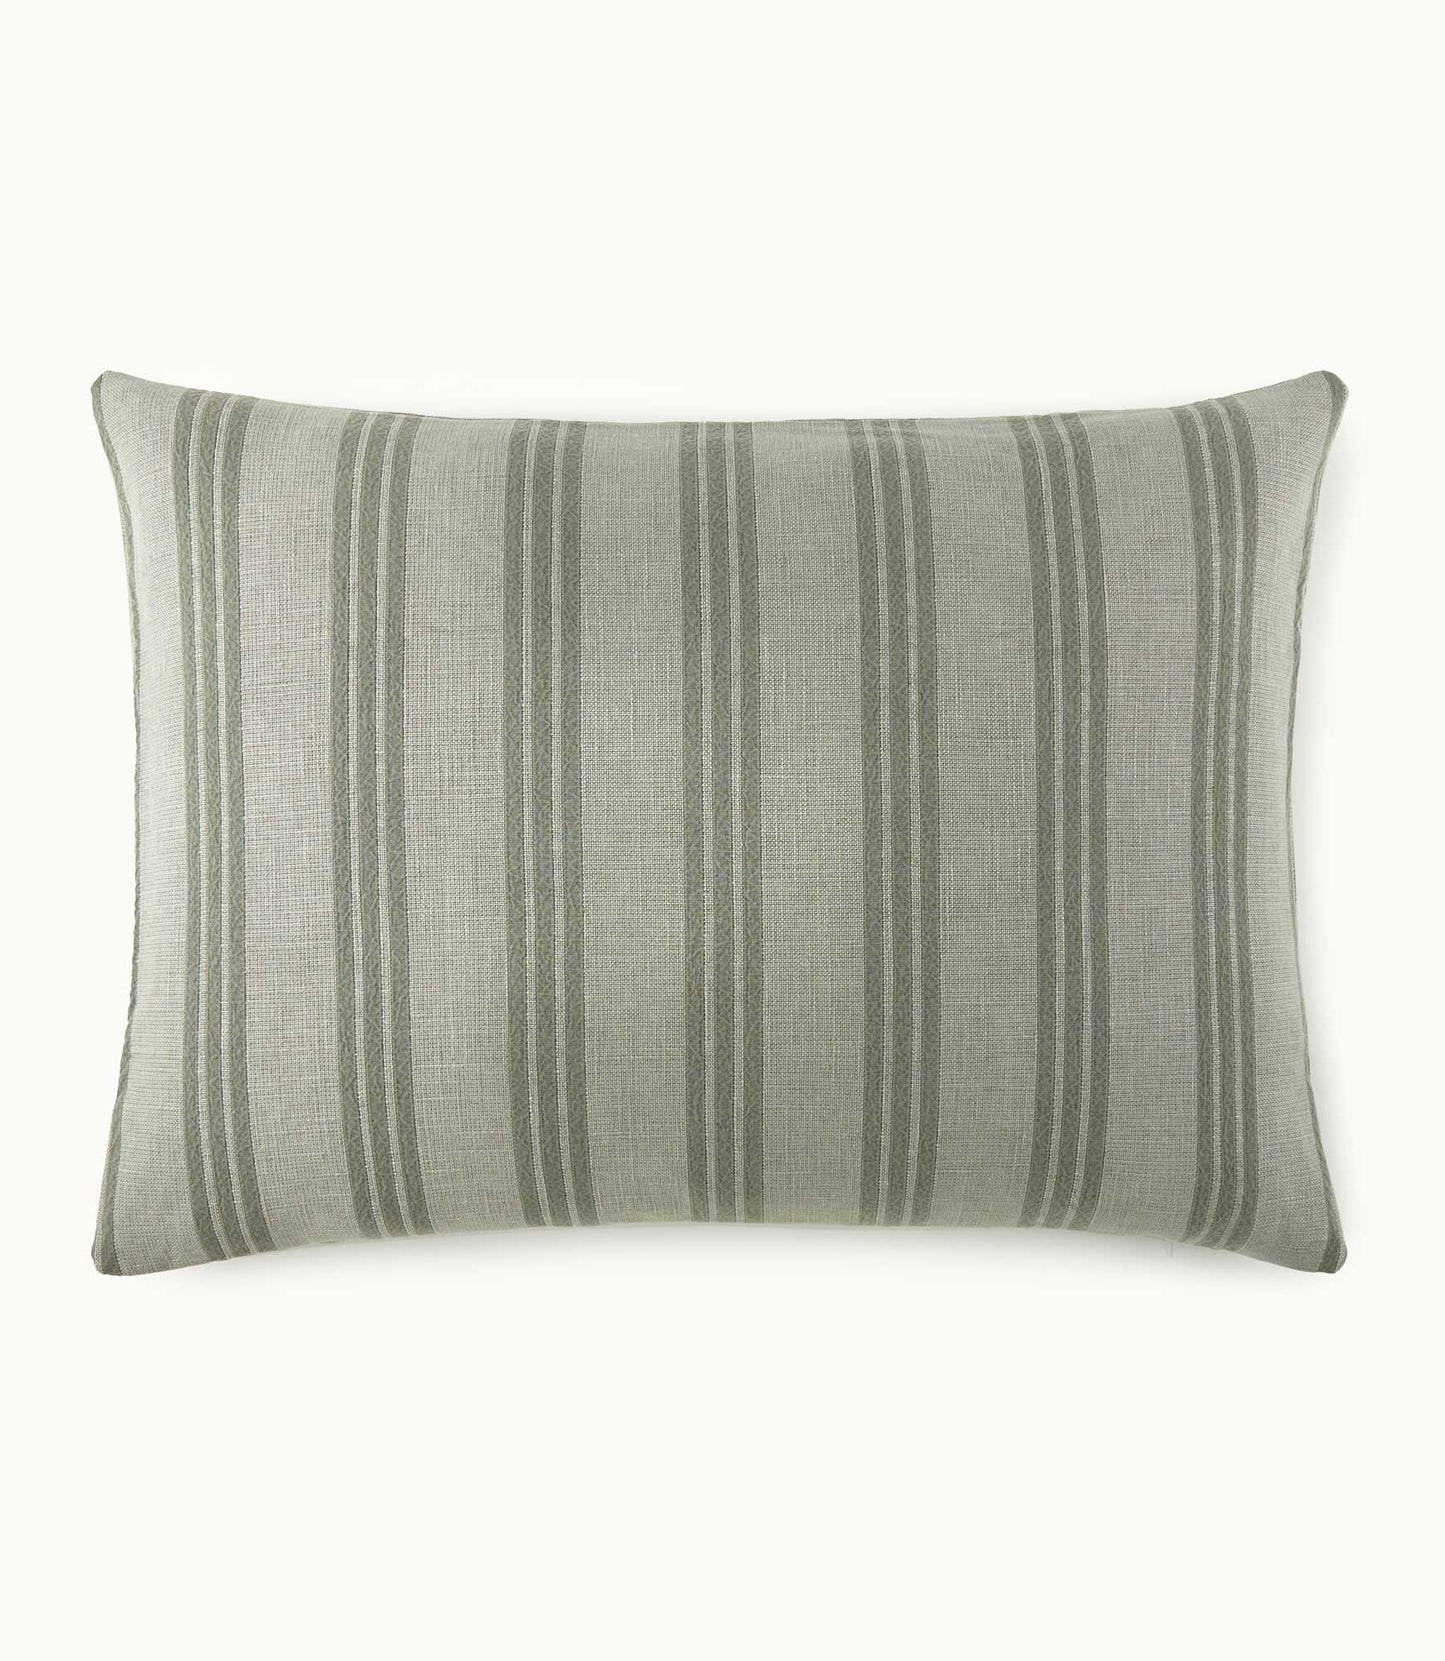 Lennox Striped Grand Euro Decorative Pillow, Green